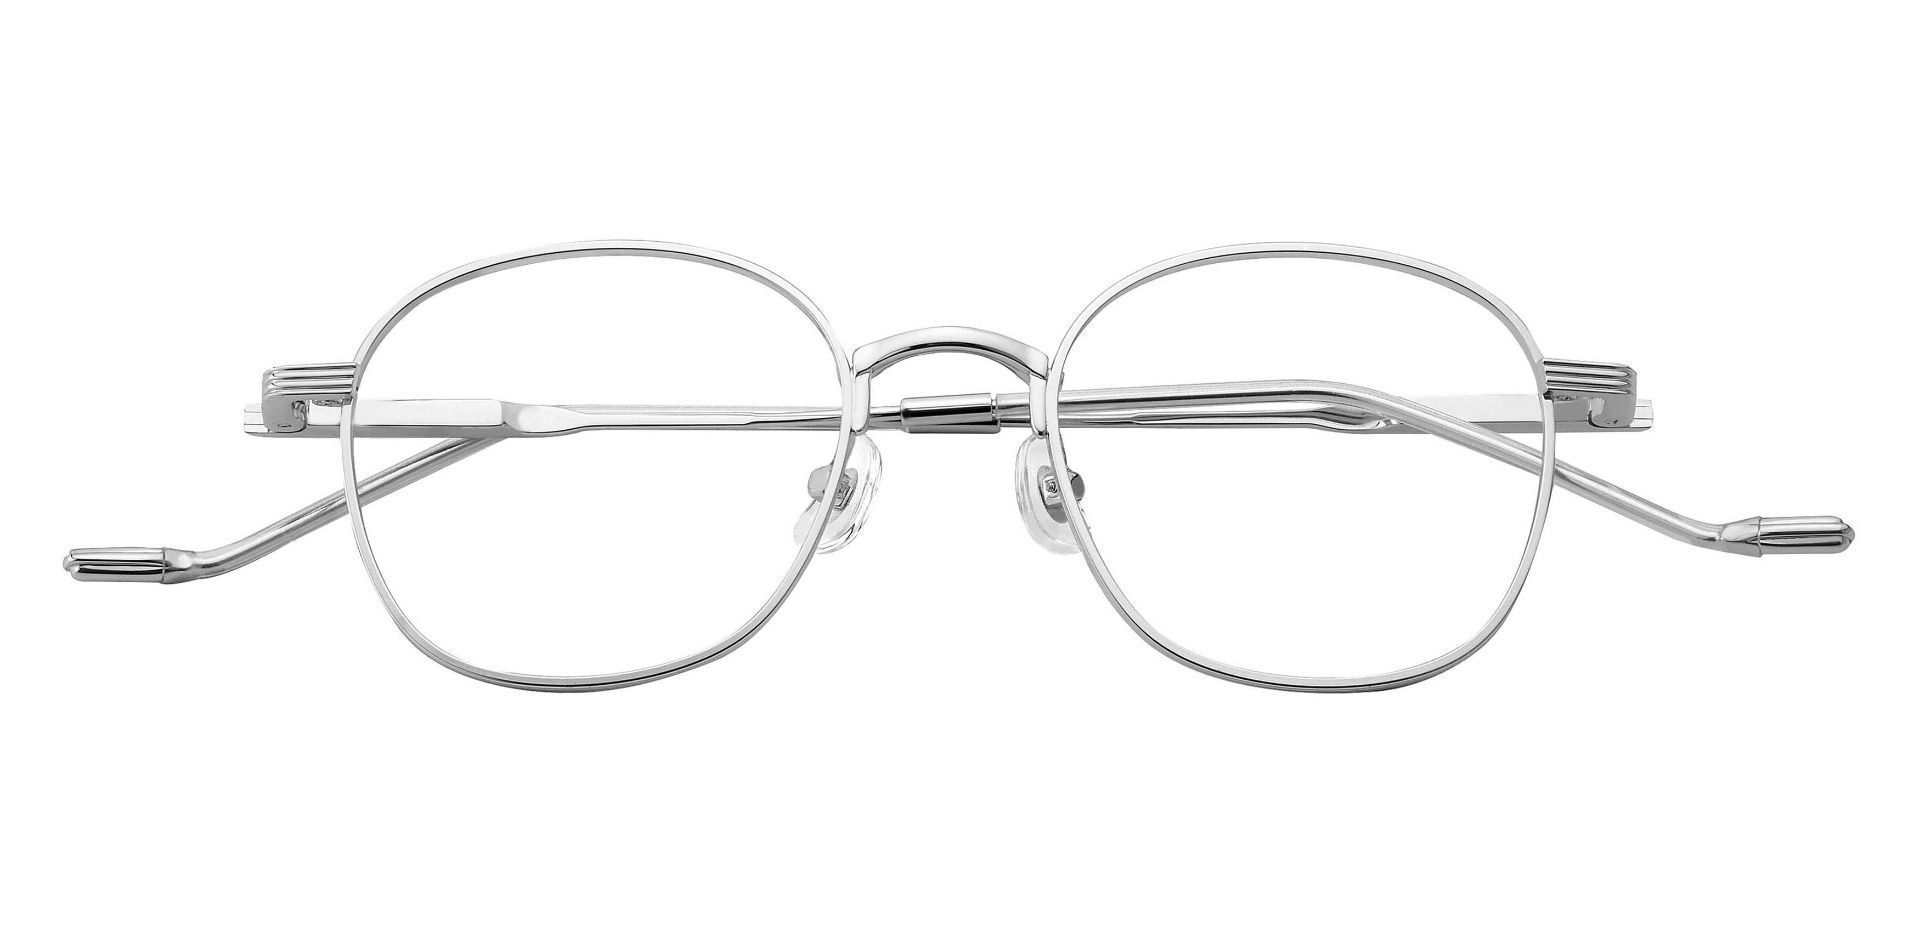 Watkins Oval Prescription Glasses - Silver